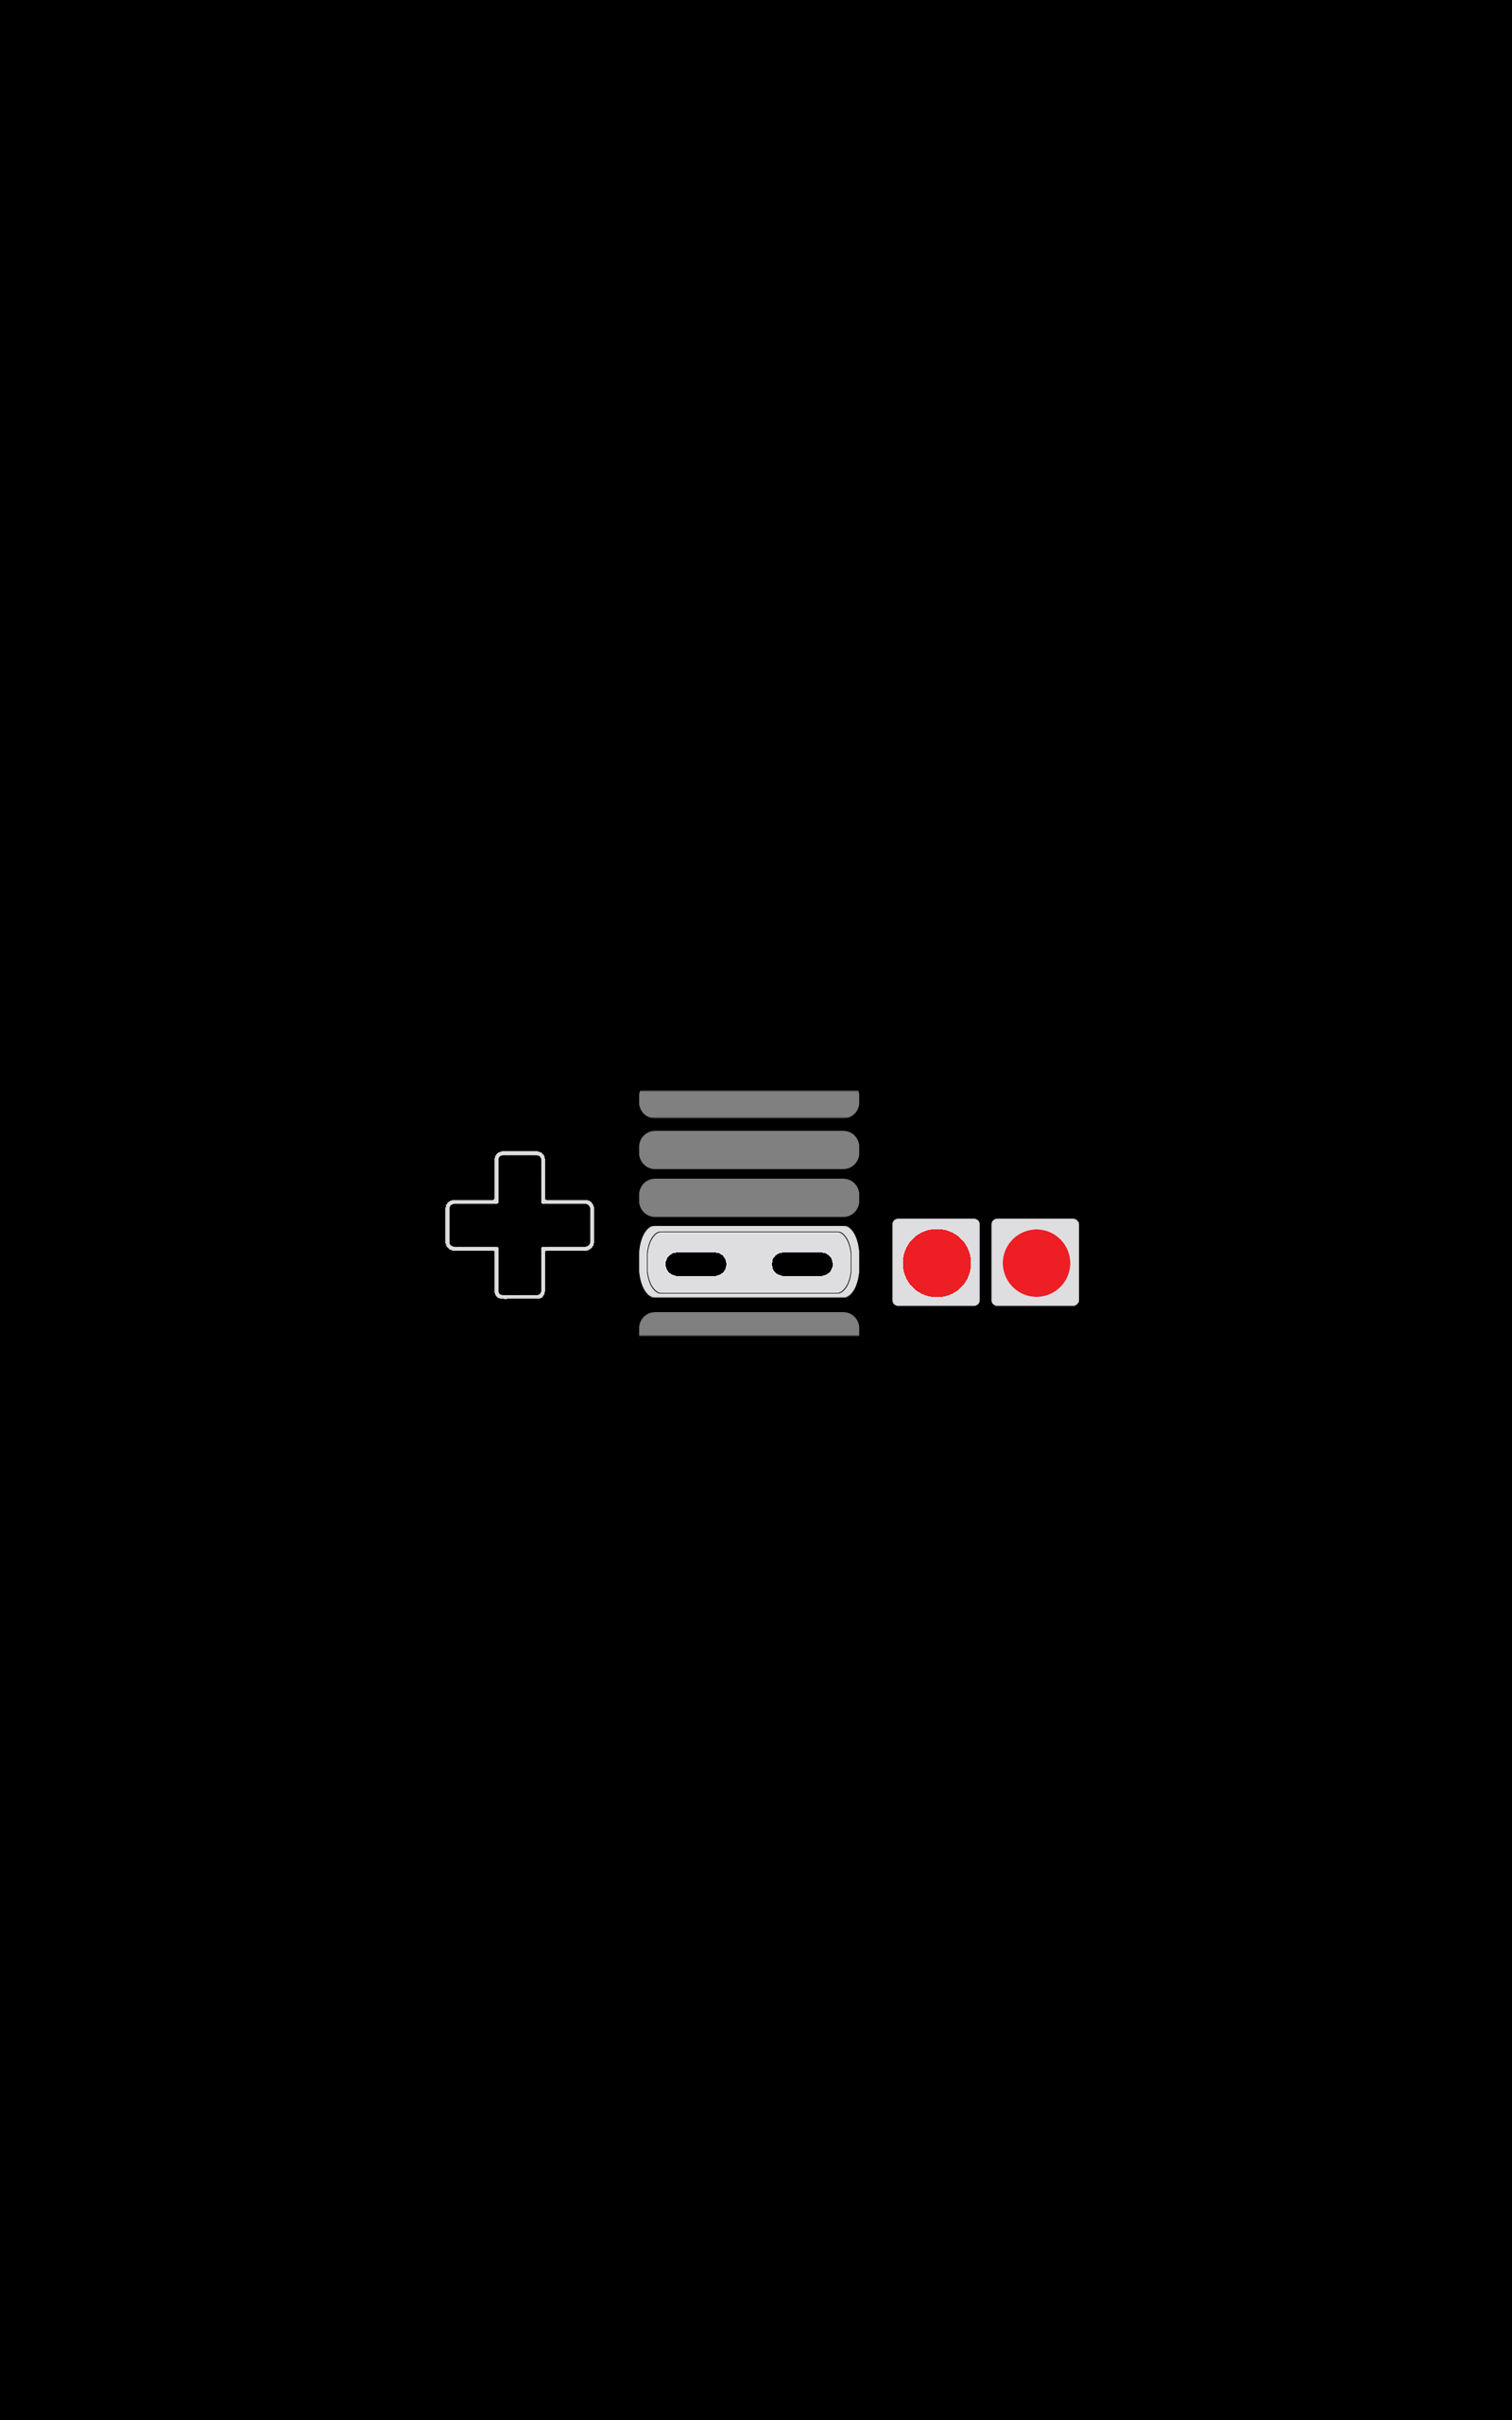 General 1600x2560 Nintendo video games video game art retro games minimalism simple background black background black portrait display